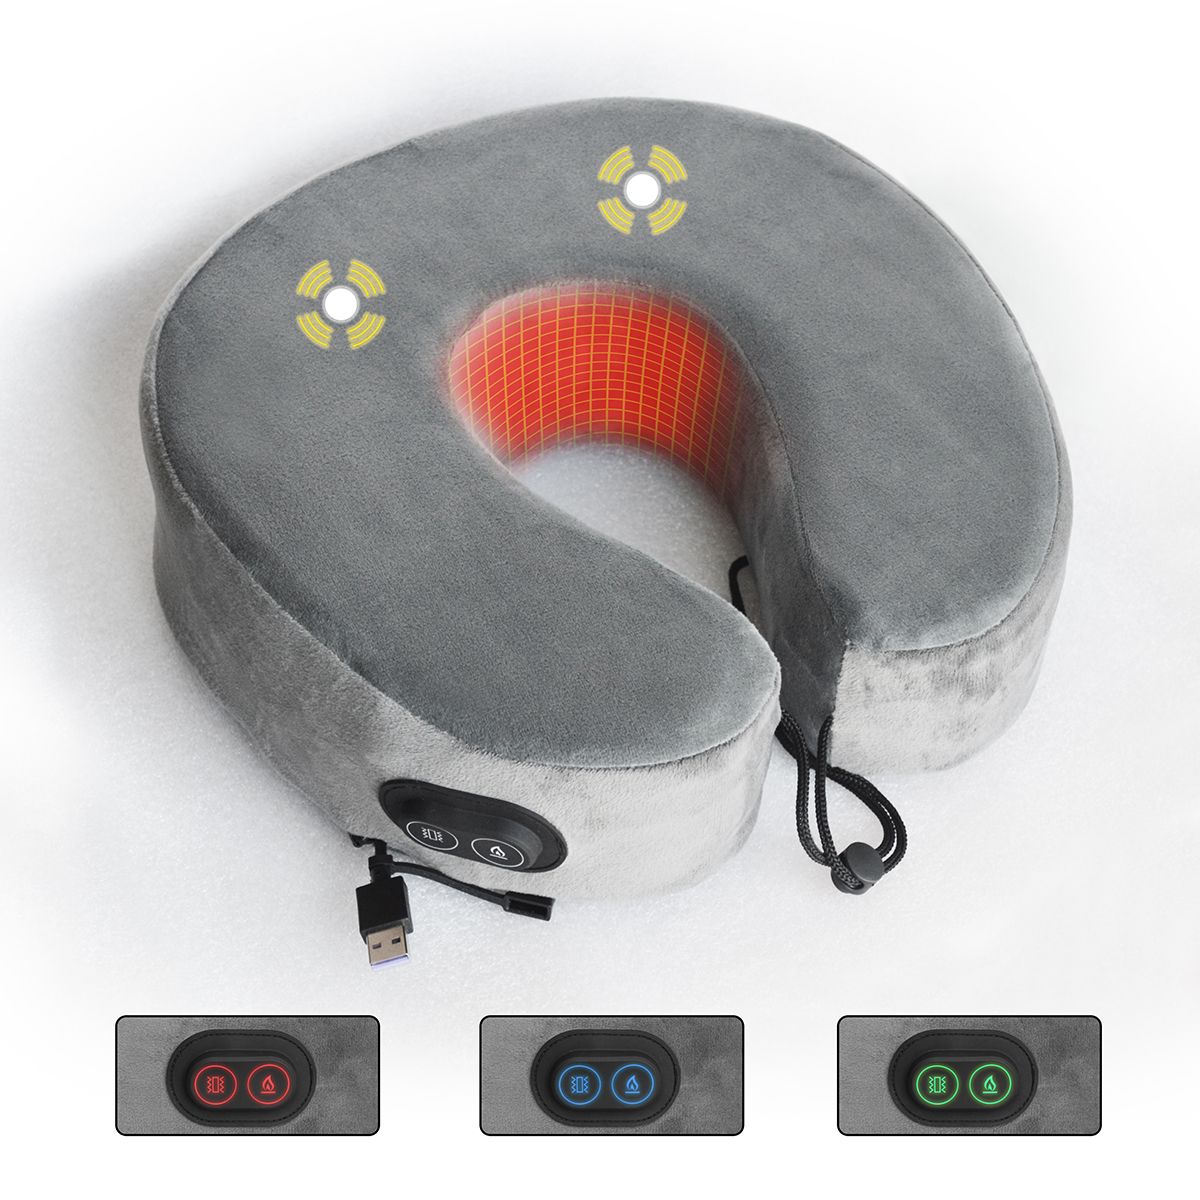 With 3 setting USB Neck massage heating